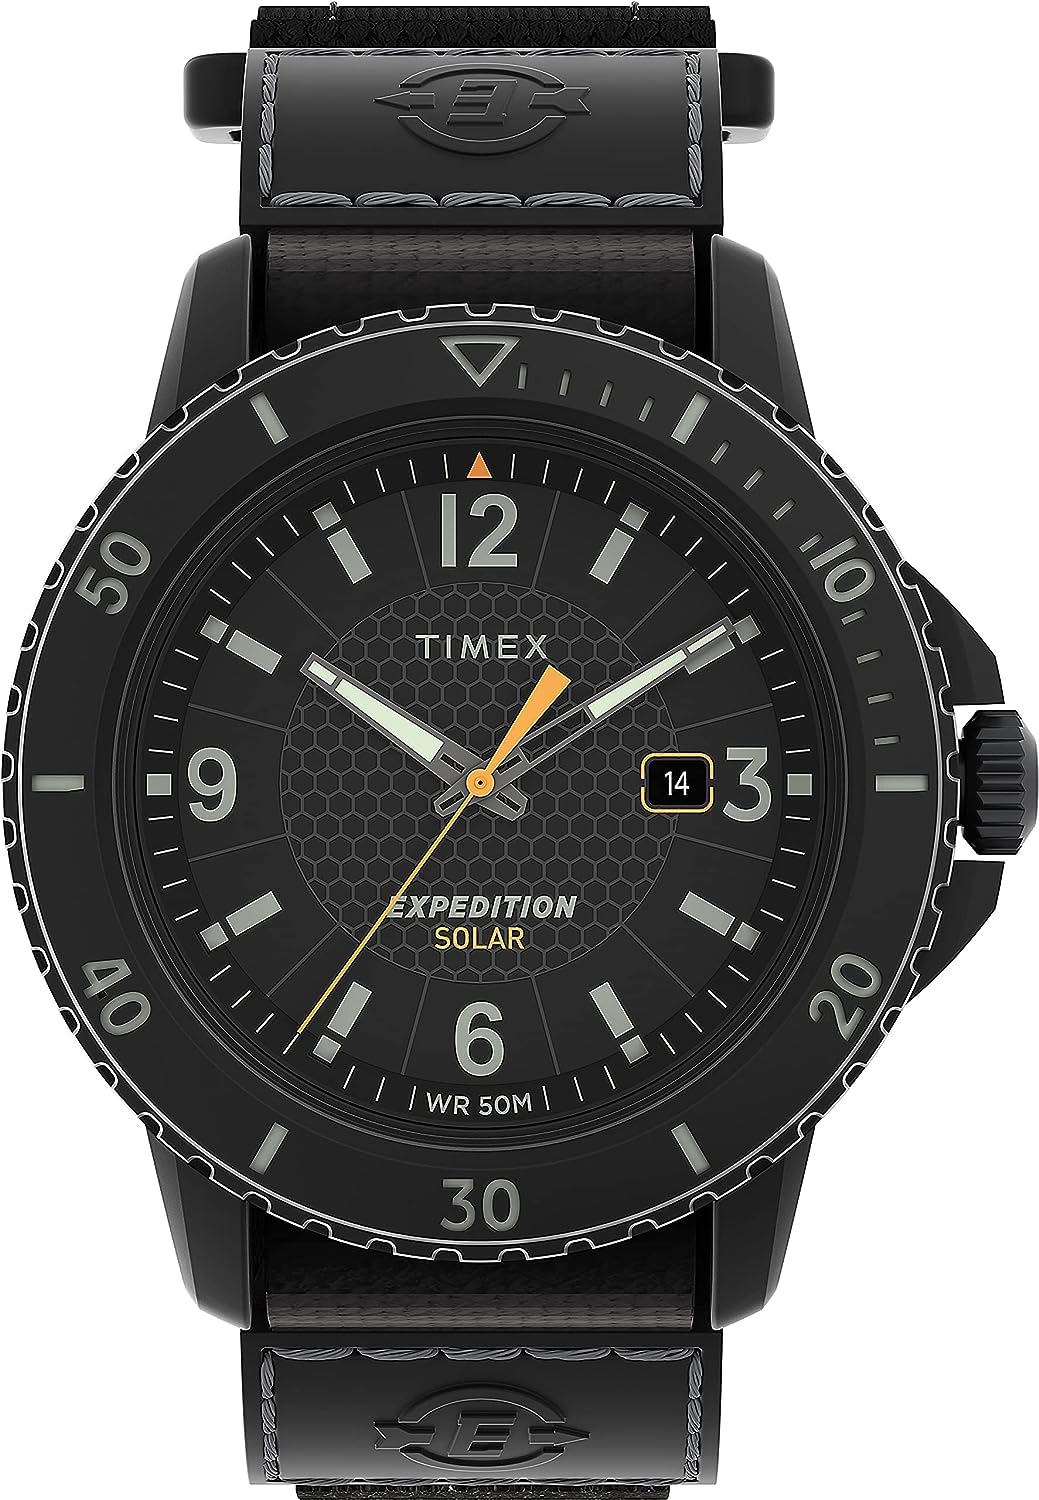 Timex Expedition Gallatin Solar 44mm Herren-ArmbanduhrTW4B23300, Schwarz